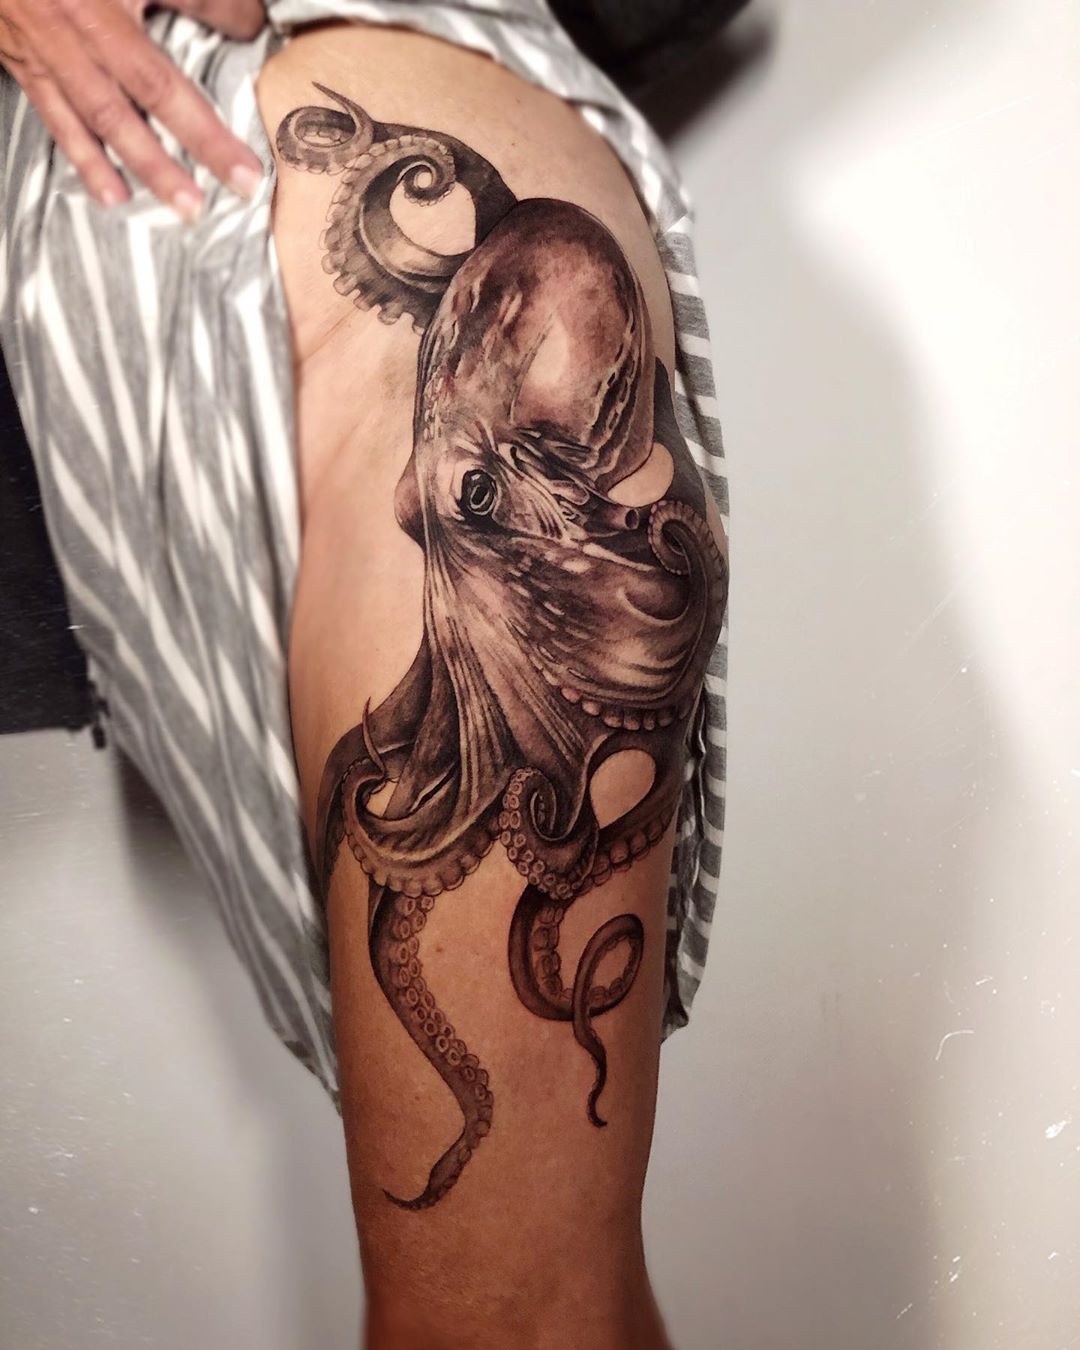 Octopus Tattoo - Best Tattoo Ideas Gallery